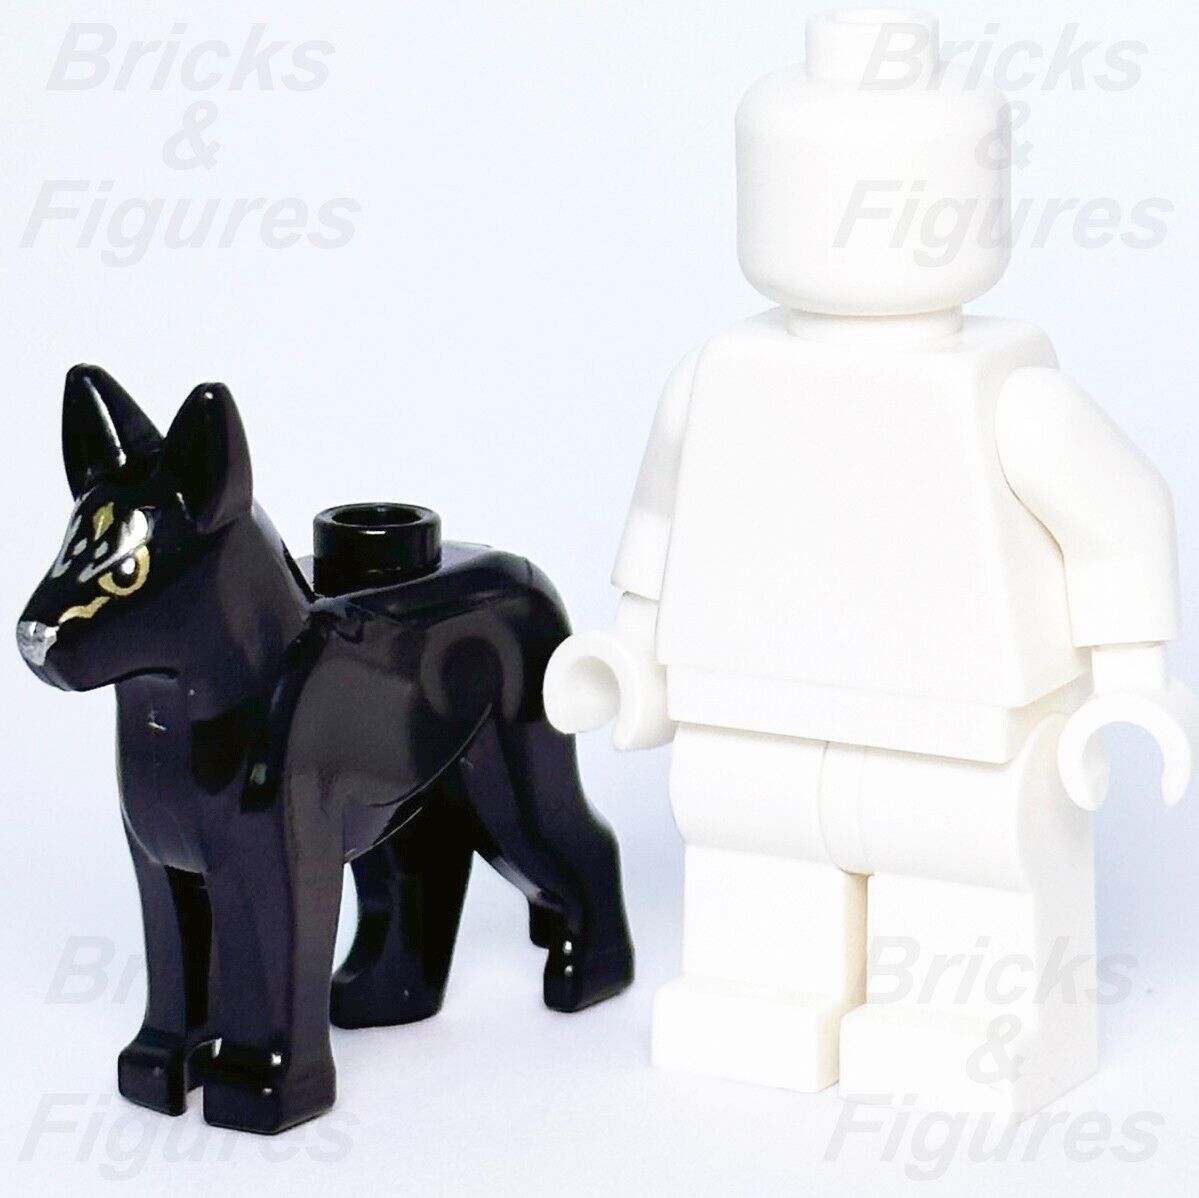 LEGO Harry Potter Sirius Black Padfoot Dog Animagus Form Minifigure Part 76407 - Bricks & Figures